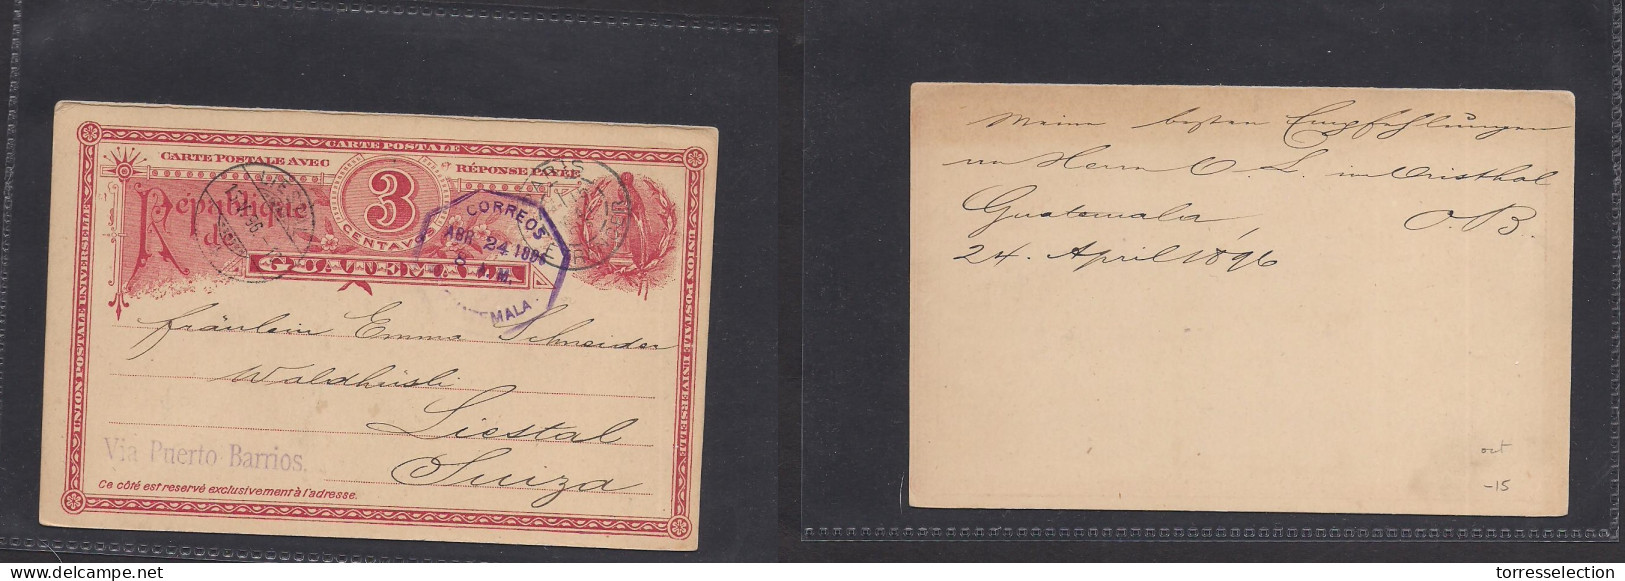 GUATEMALA. 1896 (24 Apr) GPO - Switzerland, Liestal (15 May) 3c Red Stat Card Via Paris - Puerto Barnos. Fine. - Guatemala